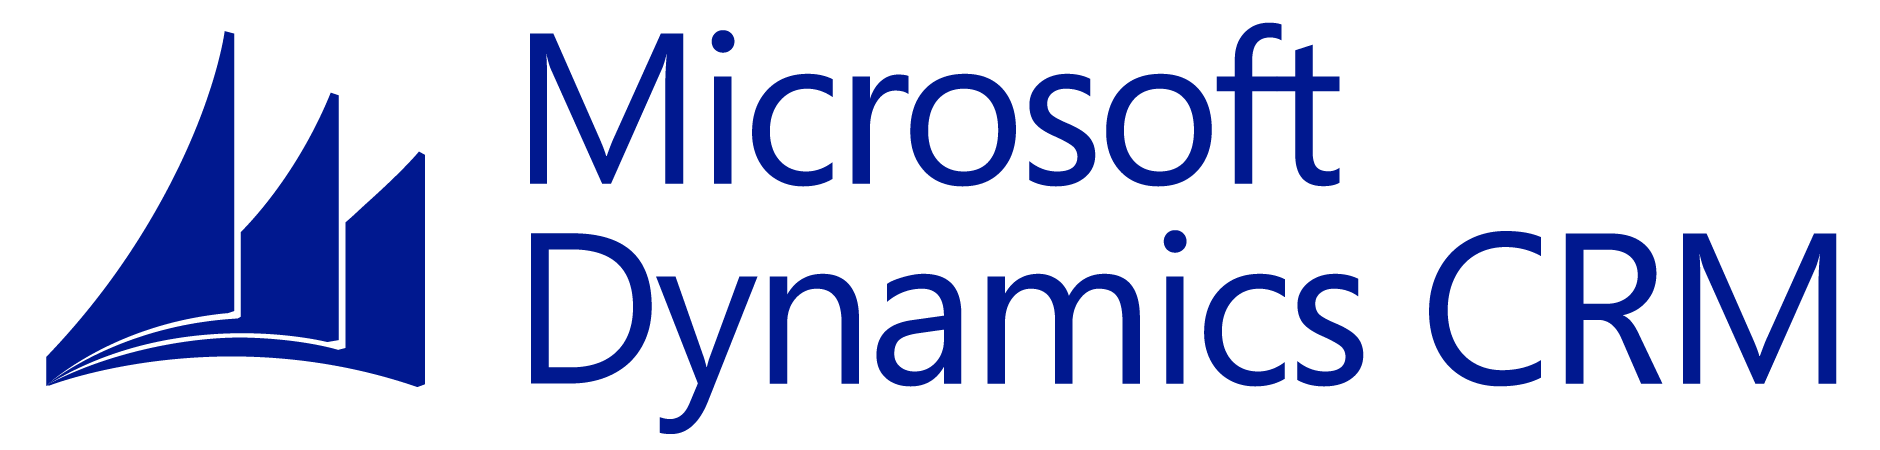 Dynamics CRM 365 Logo - Dynamics Logo Png Image